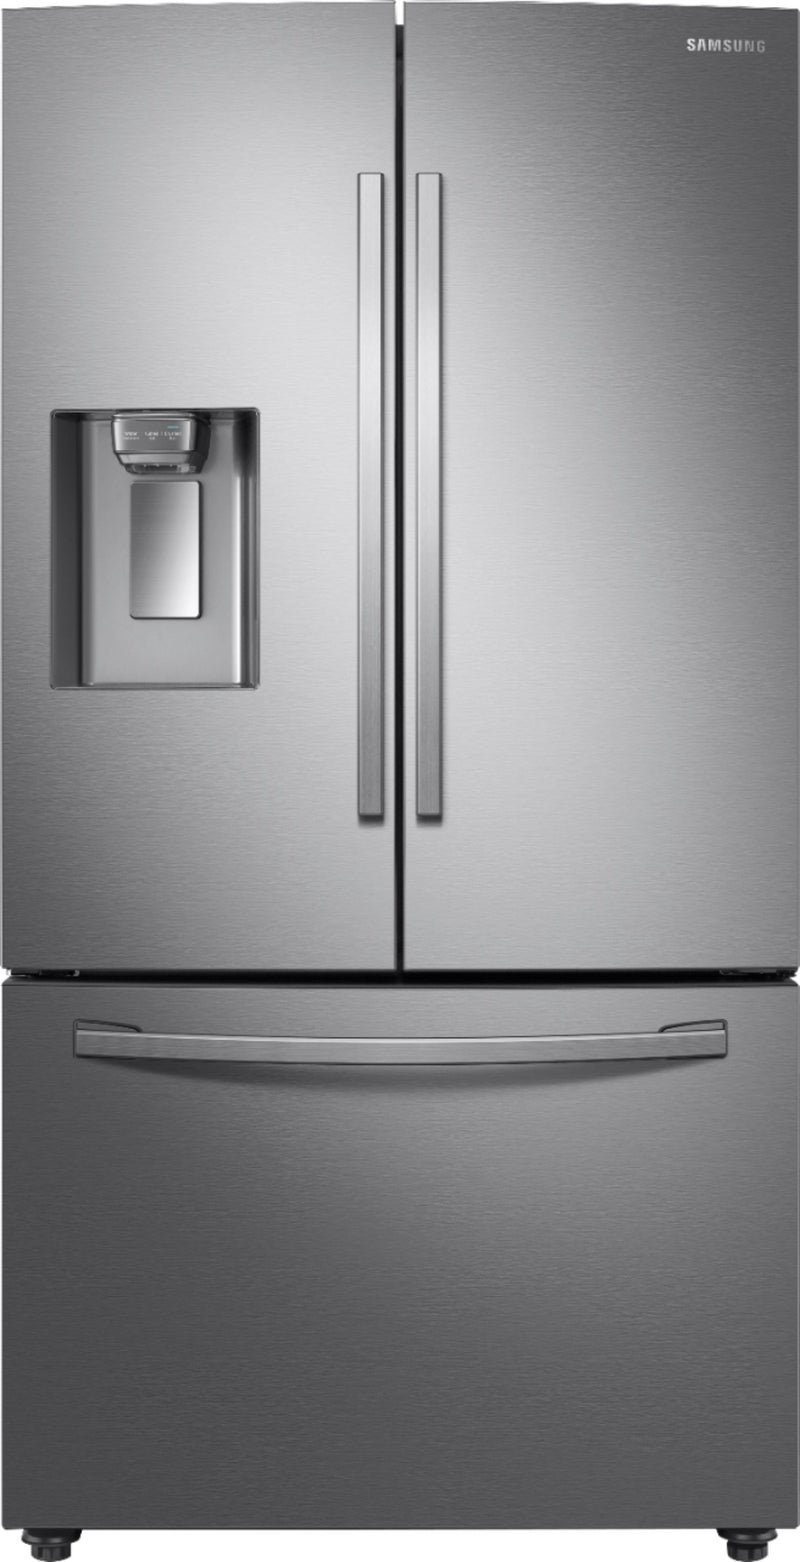 Samsung RF28R6201SR 28 Cu. Ft. French Door Refrigerator